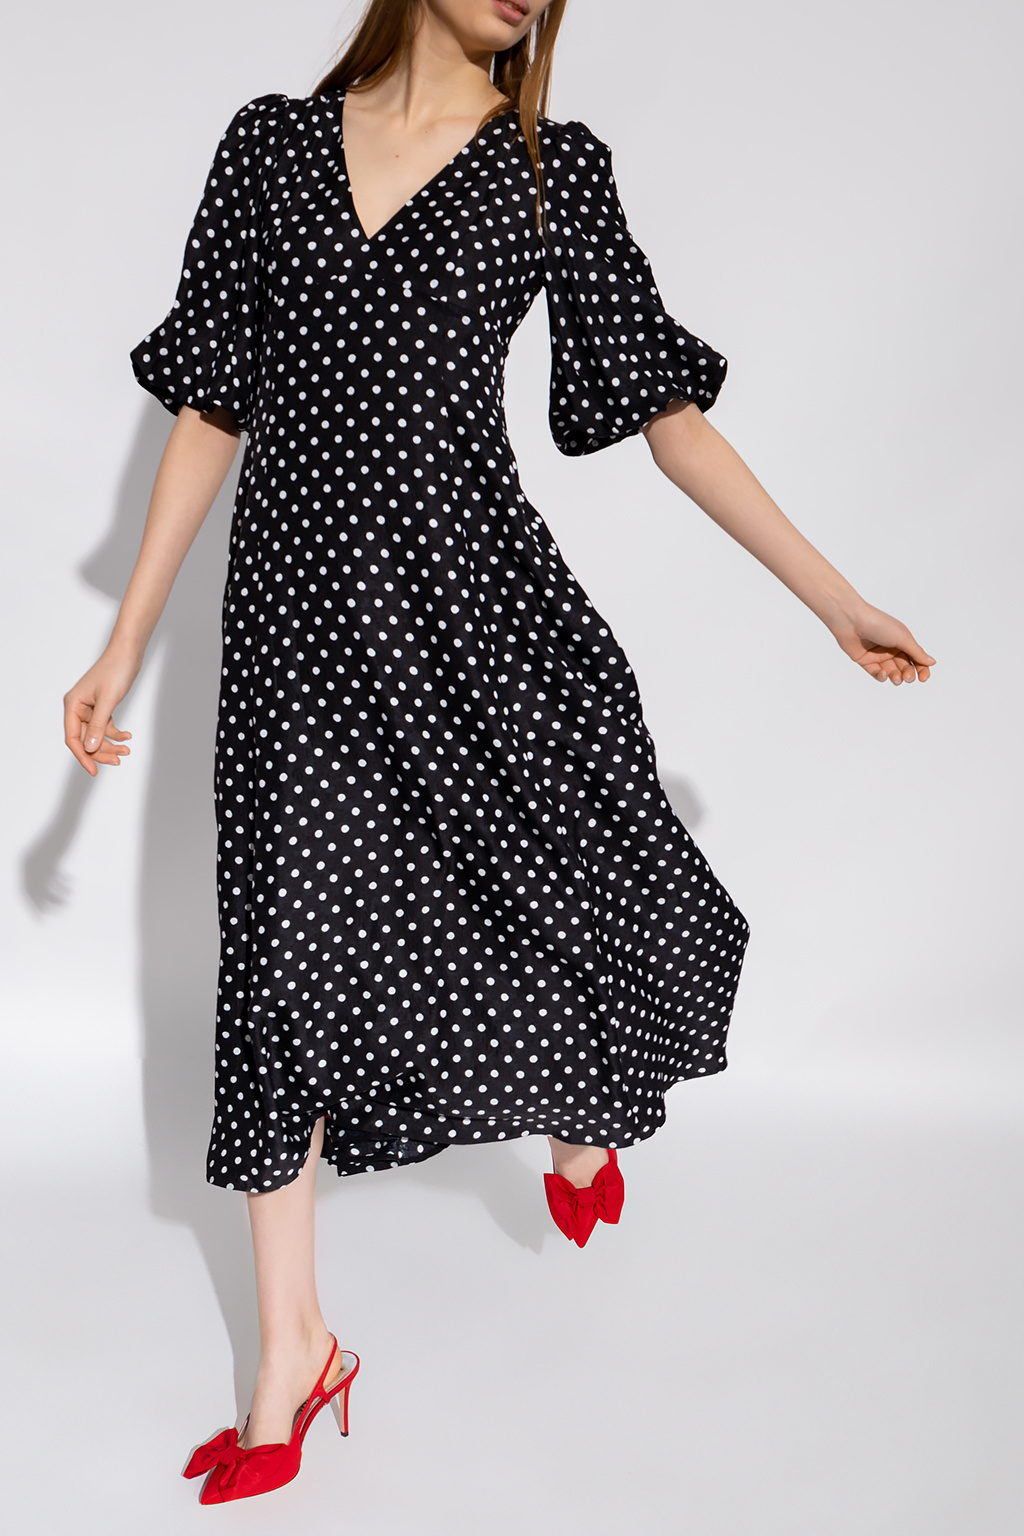 Kate Spade Polka dot dress | Women's Clothing | Vitkac